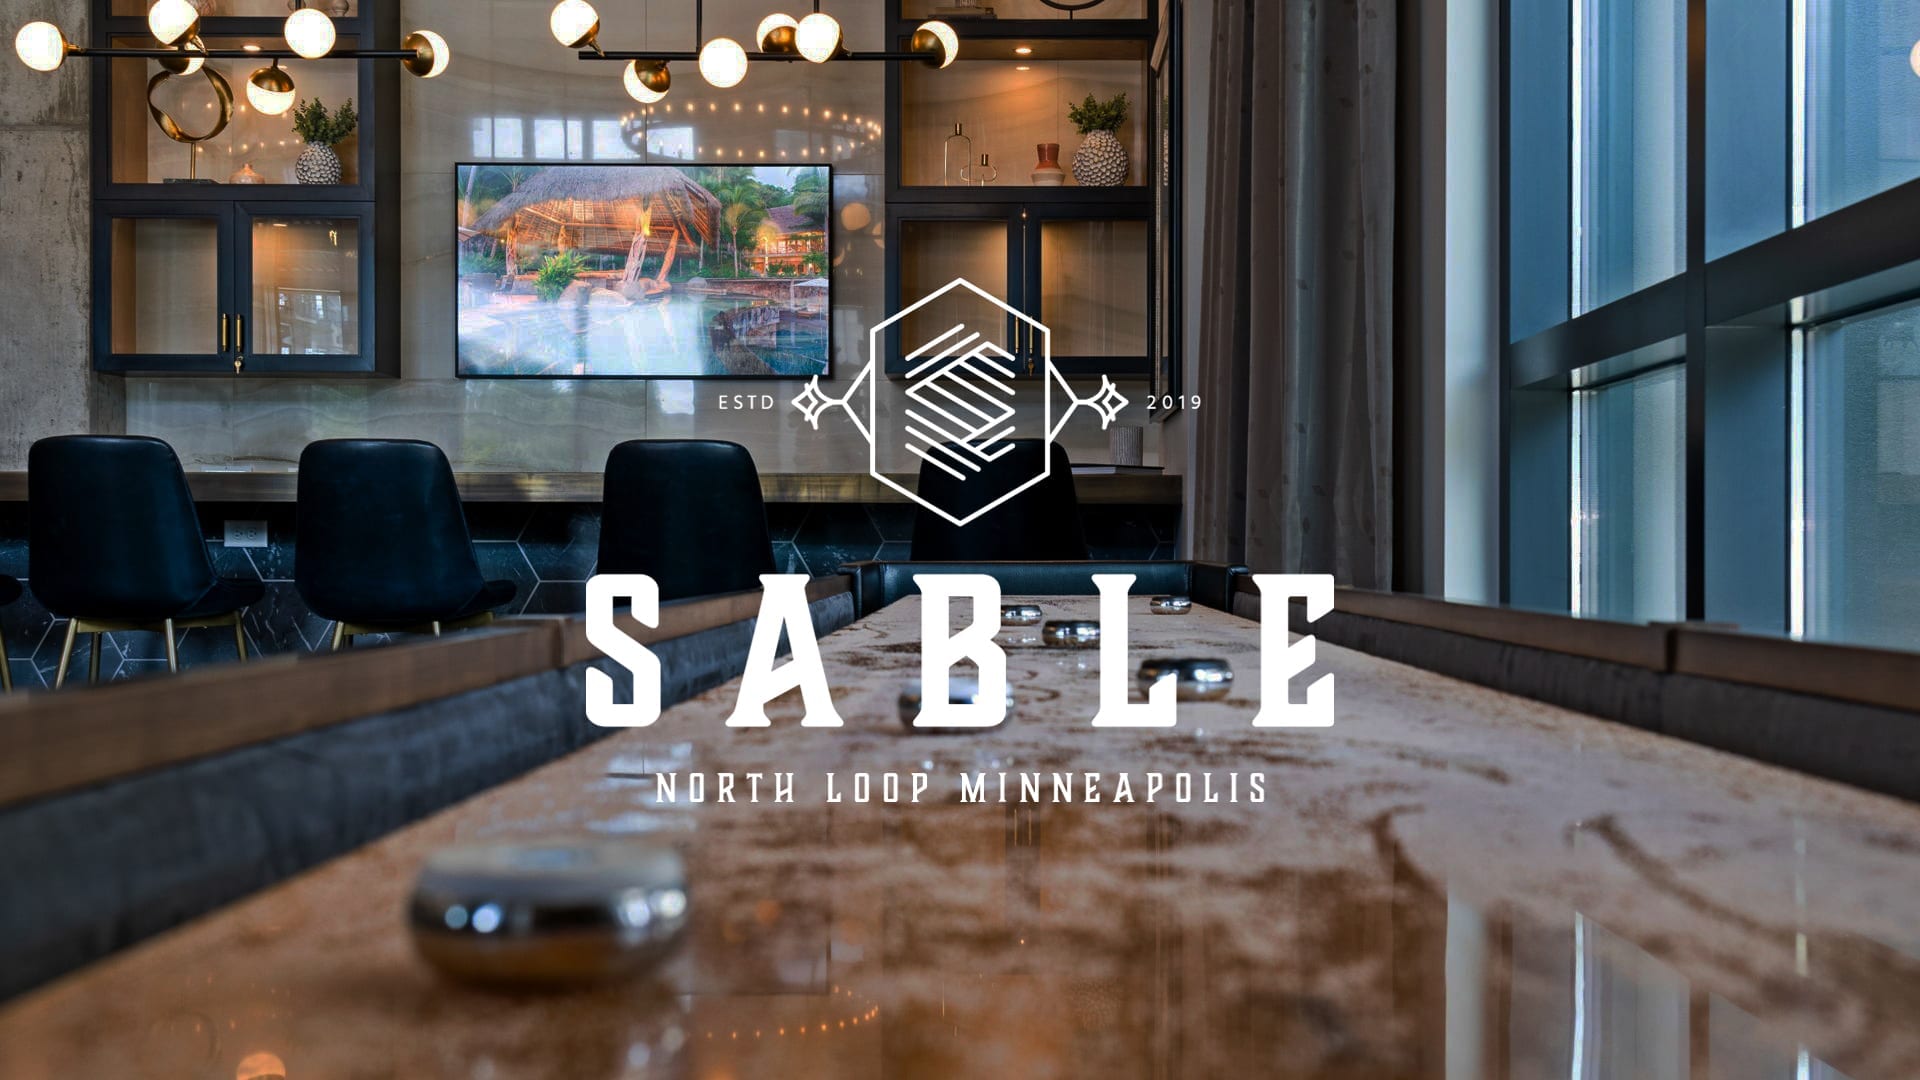 Restaurant. Text: Sable, North Loop Minneapolis.